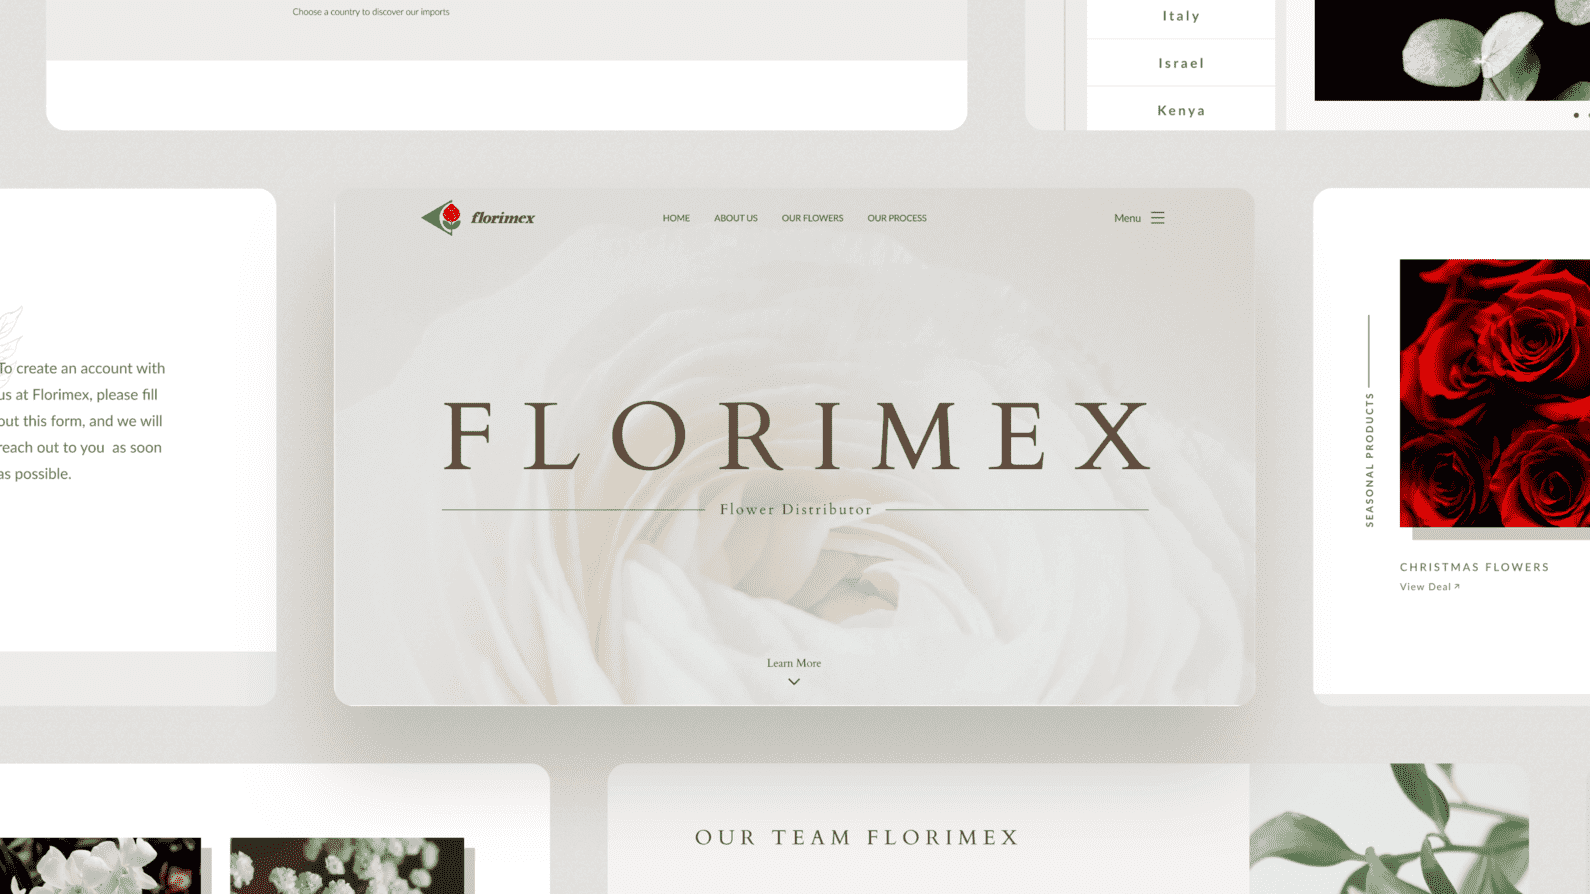 Discover Florimex's Renowned Wholesale Florist: A Brand Vision Marketing Case Study.